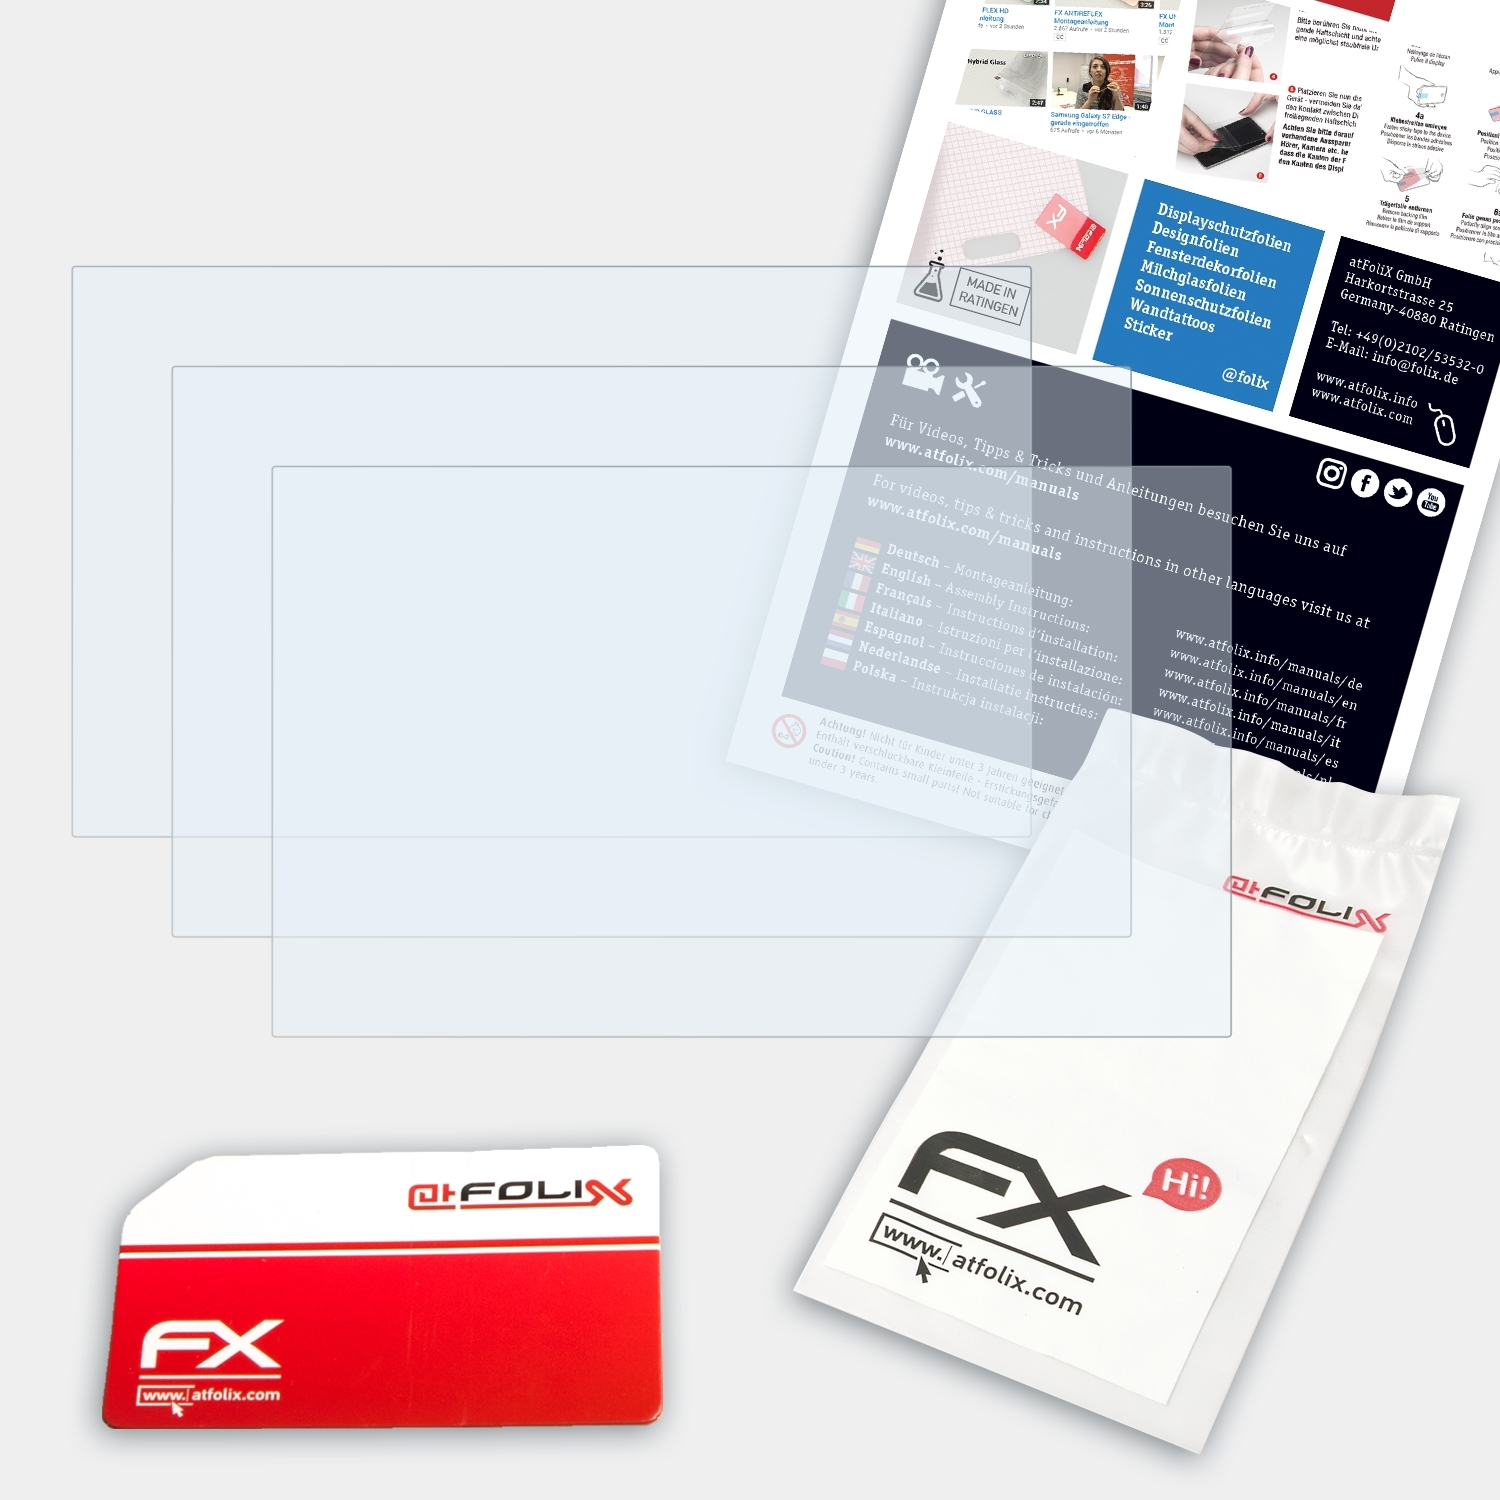 X800D-U) Alpine 3x FX-Clear ATFOLIX Displayschutz(für